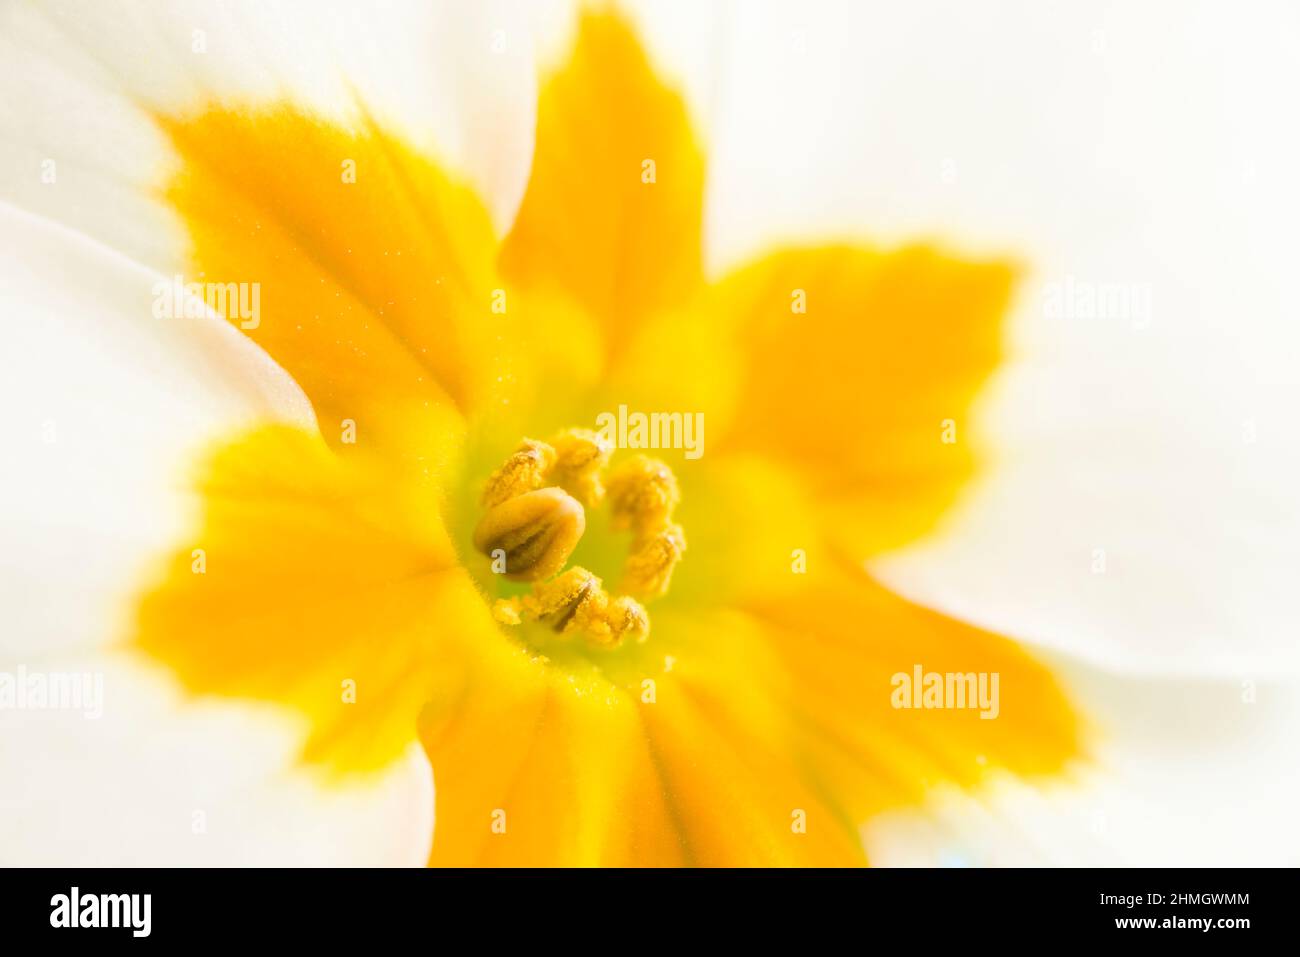 Eine Nahaufnahme einer farbenfrohen Primula vulgaris (Primula vulgaris) Blume. Stockfoto